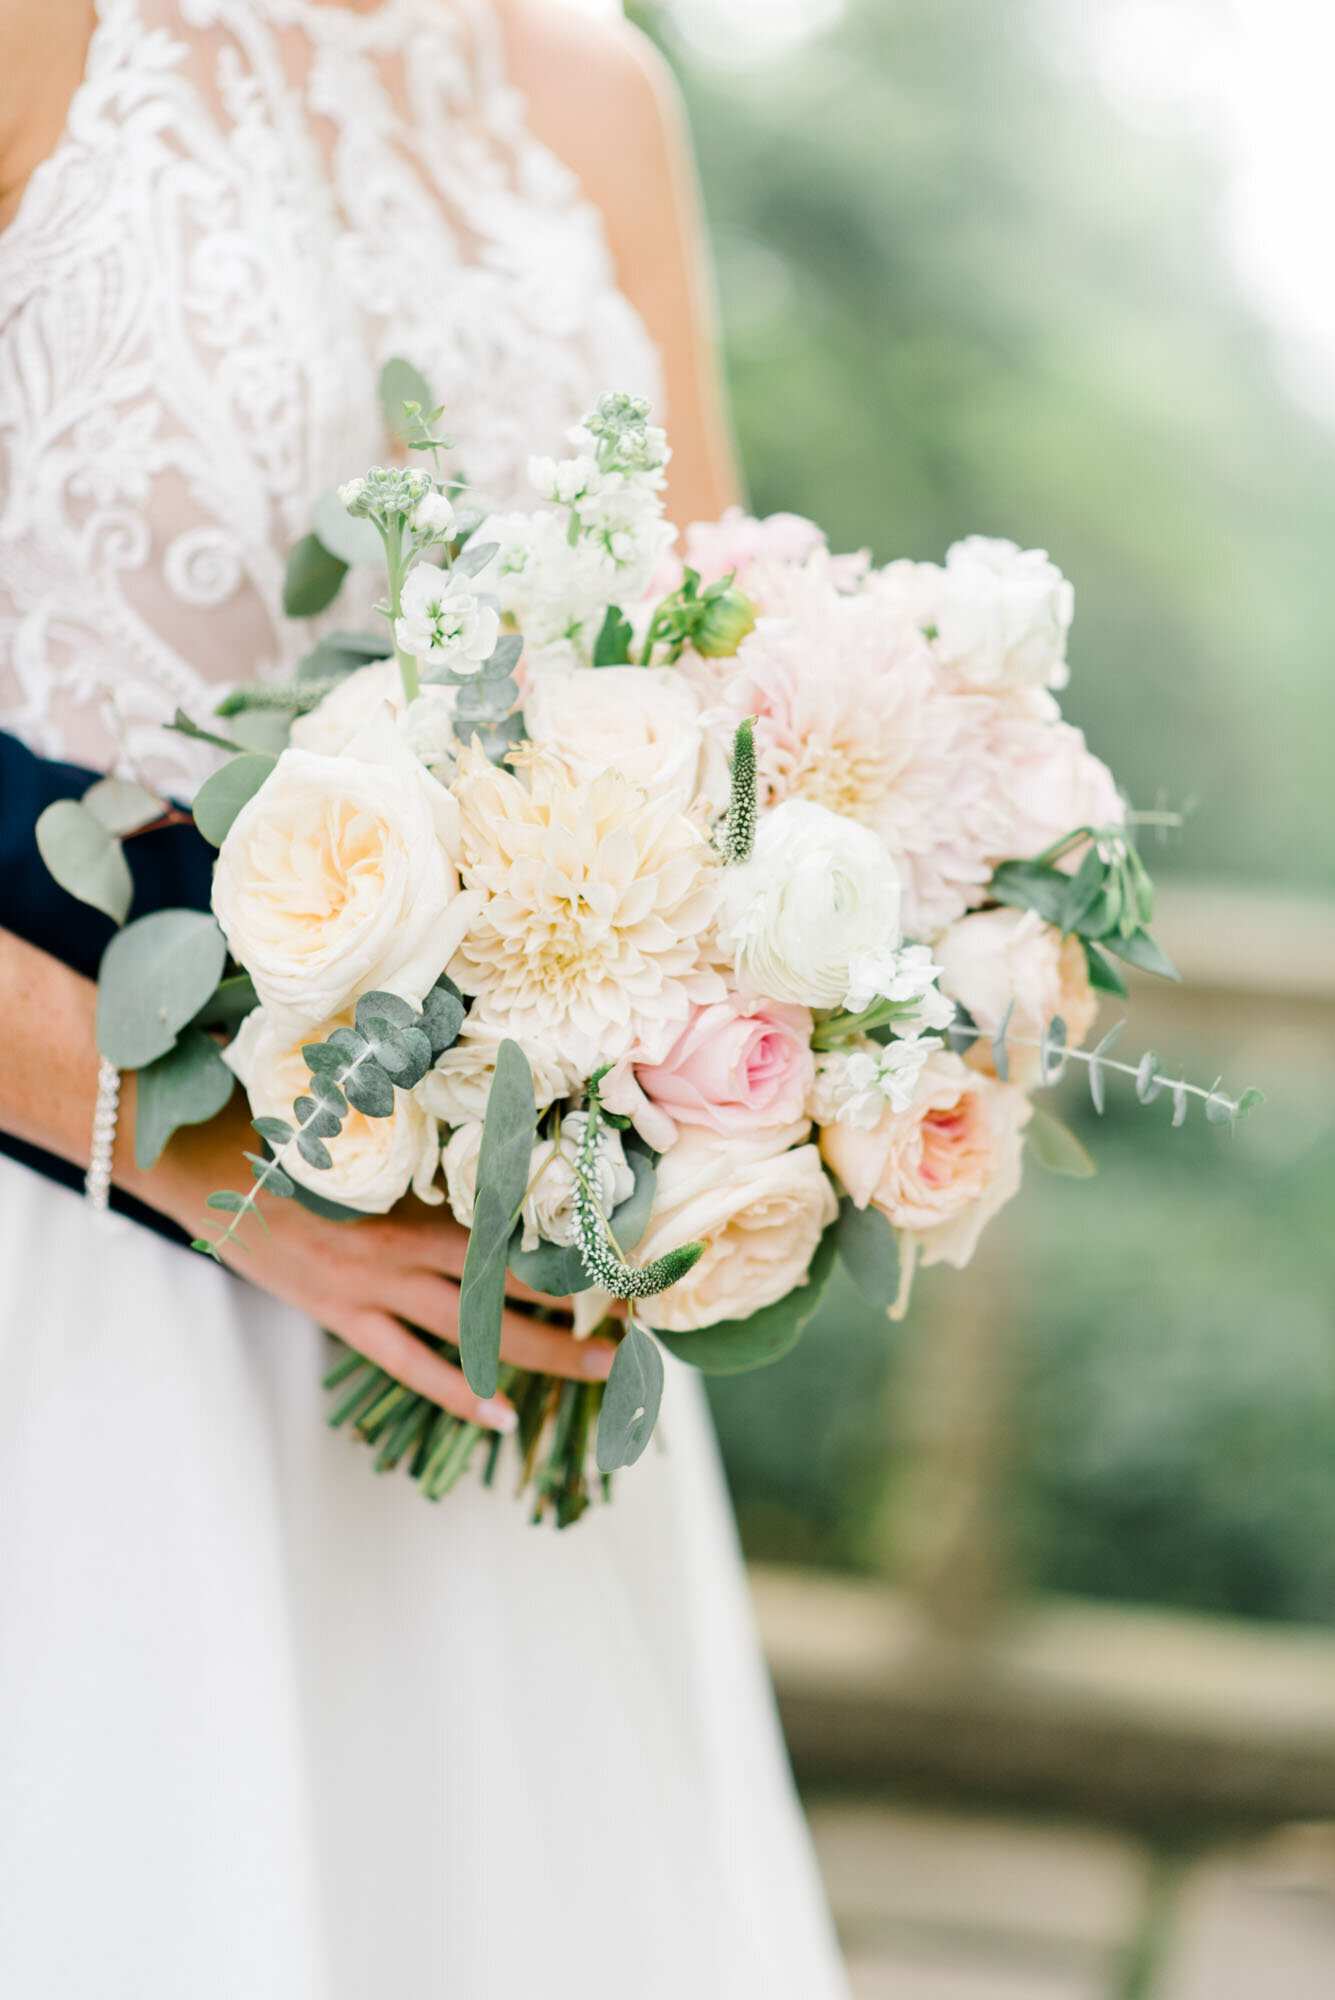 Kristin Leanne Photography - Diana Elizabeth Designs Cleveland Wedding Florist - 50